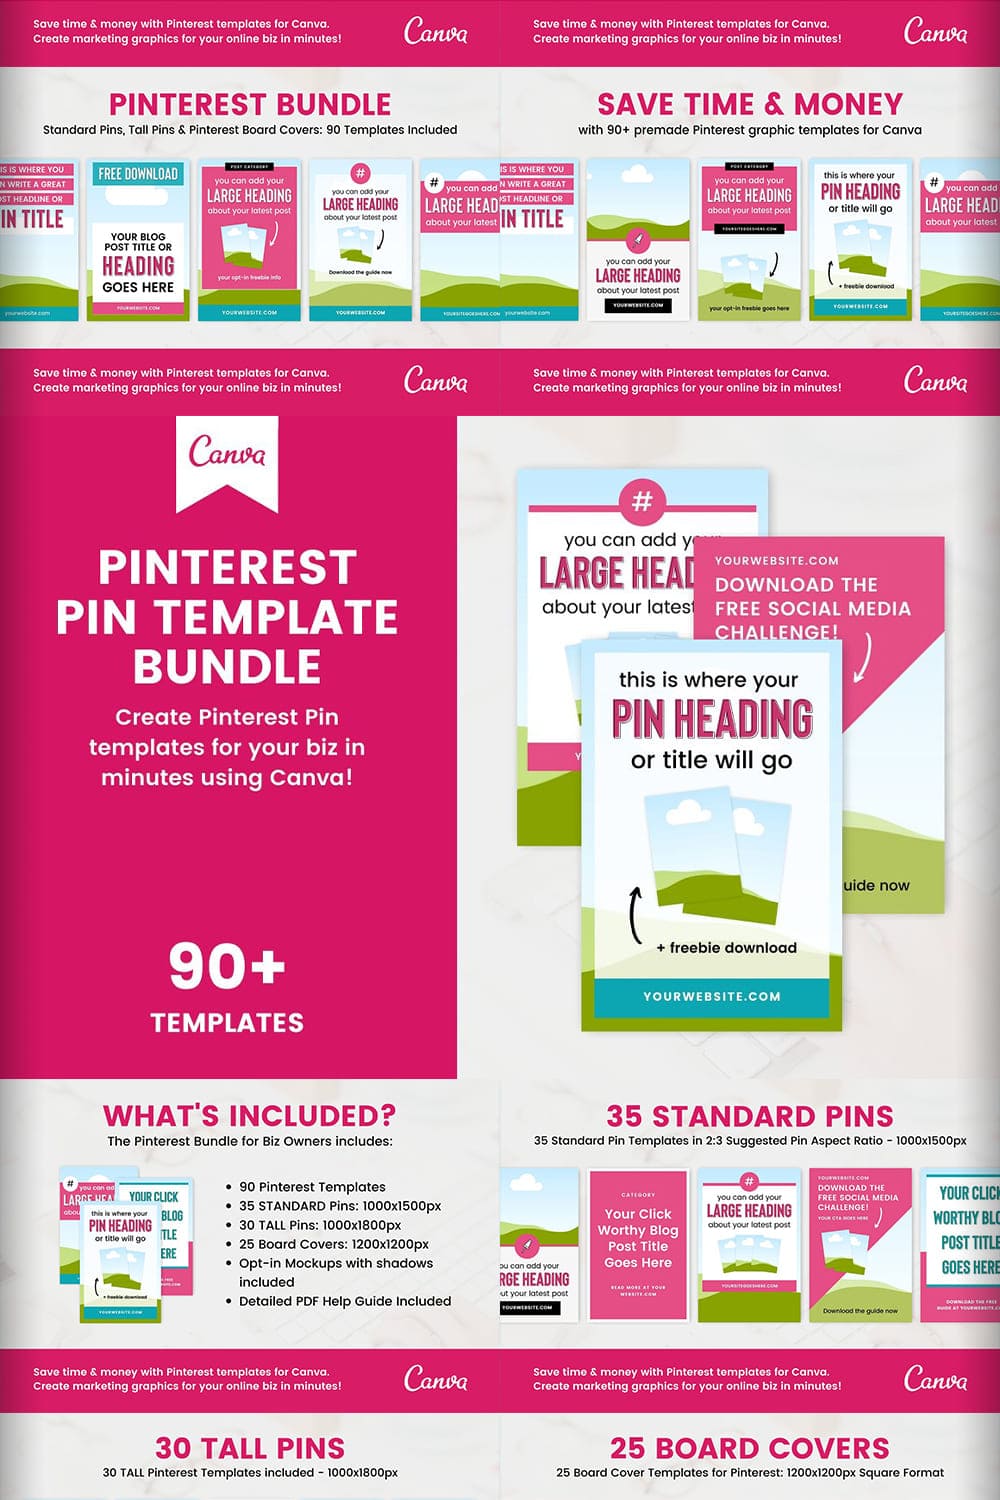 Pinterest Pin Template Bundle -"Save Time & Money!".